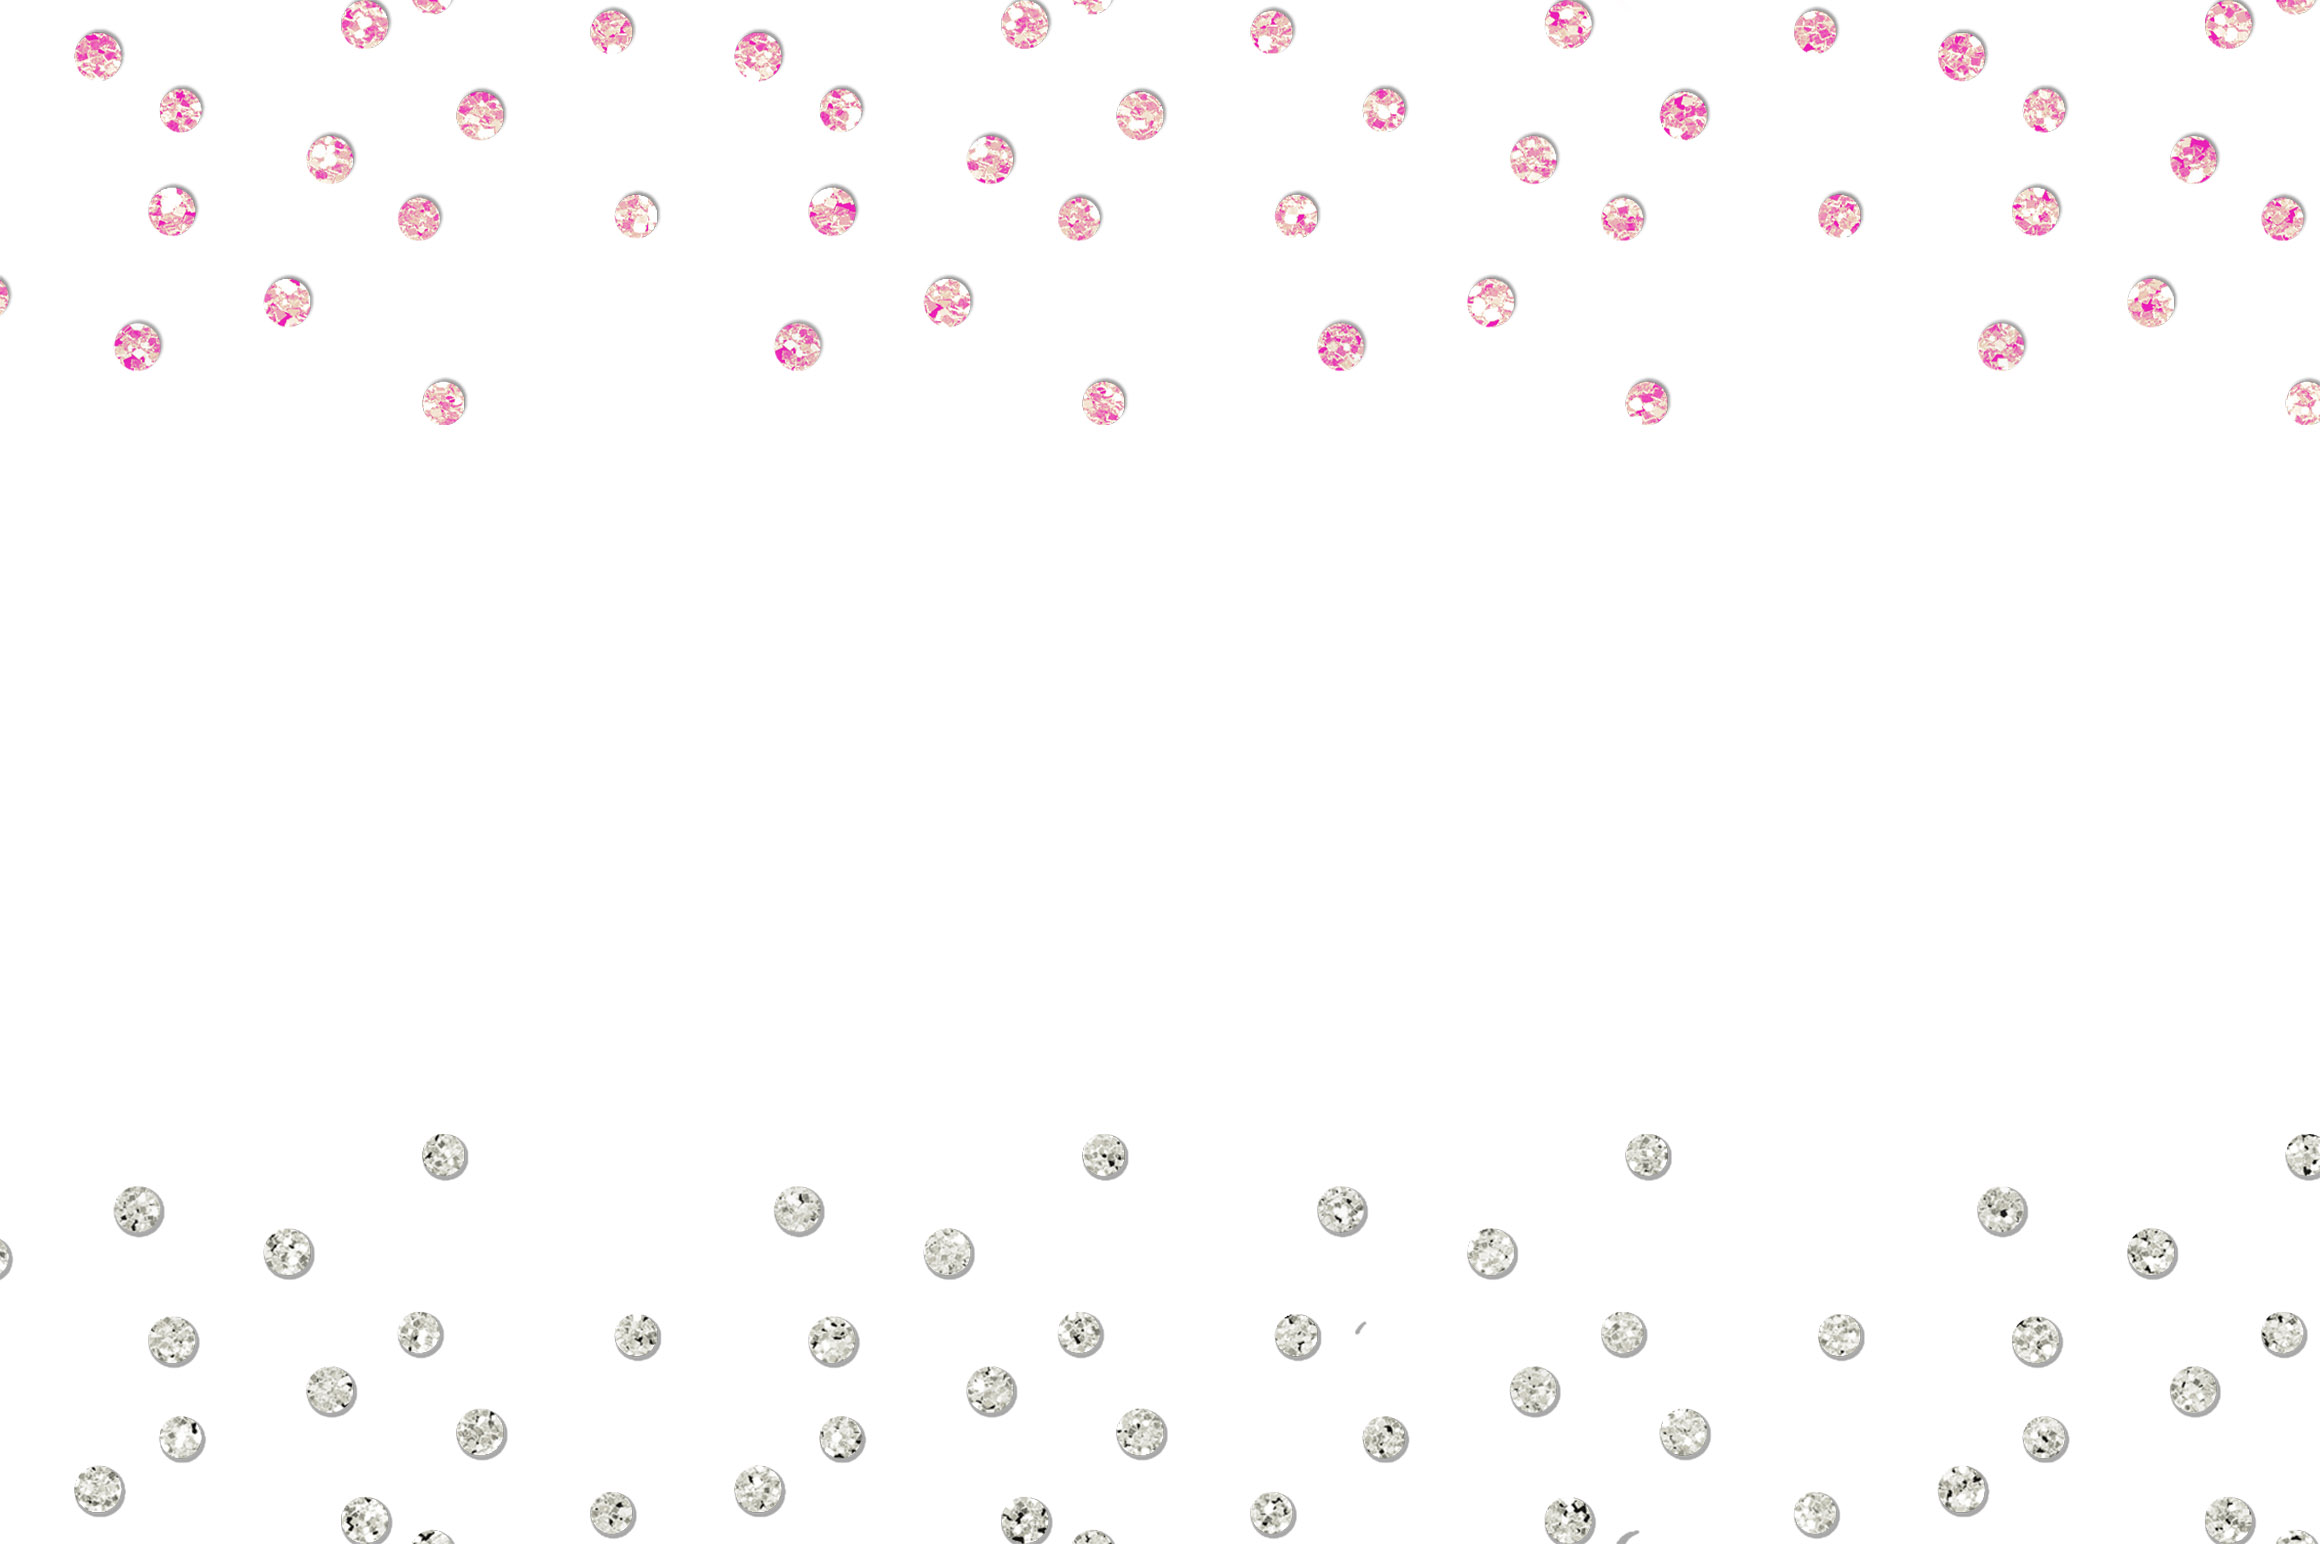 Glitter confetti borders ~ Illustrations on Creative Market